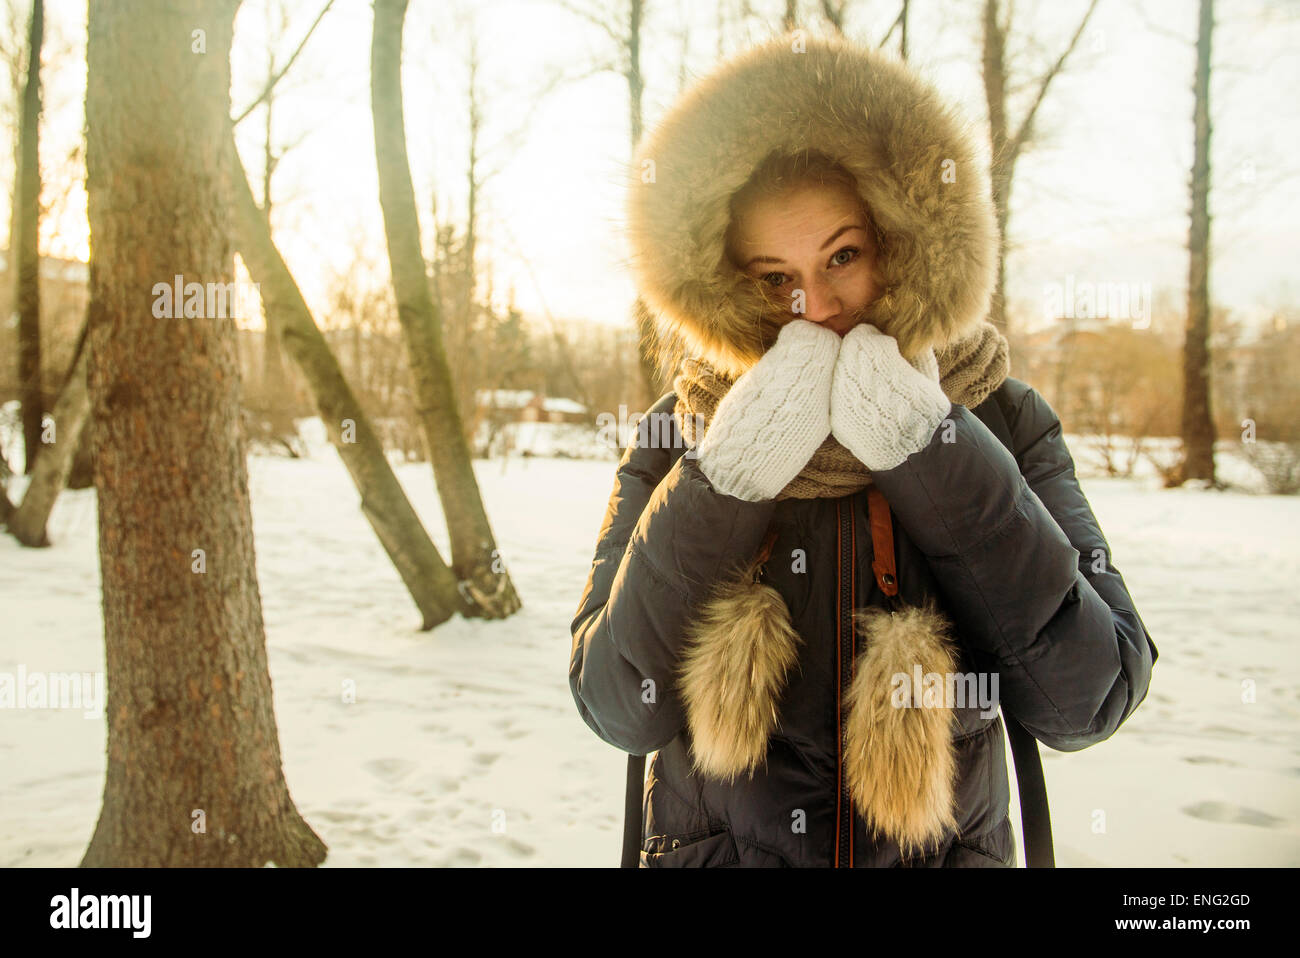 Caucasian woman wearing fur hood and coat in snowy field Stock Photo